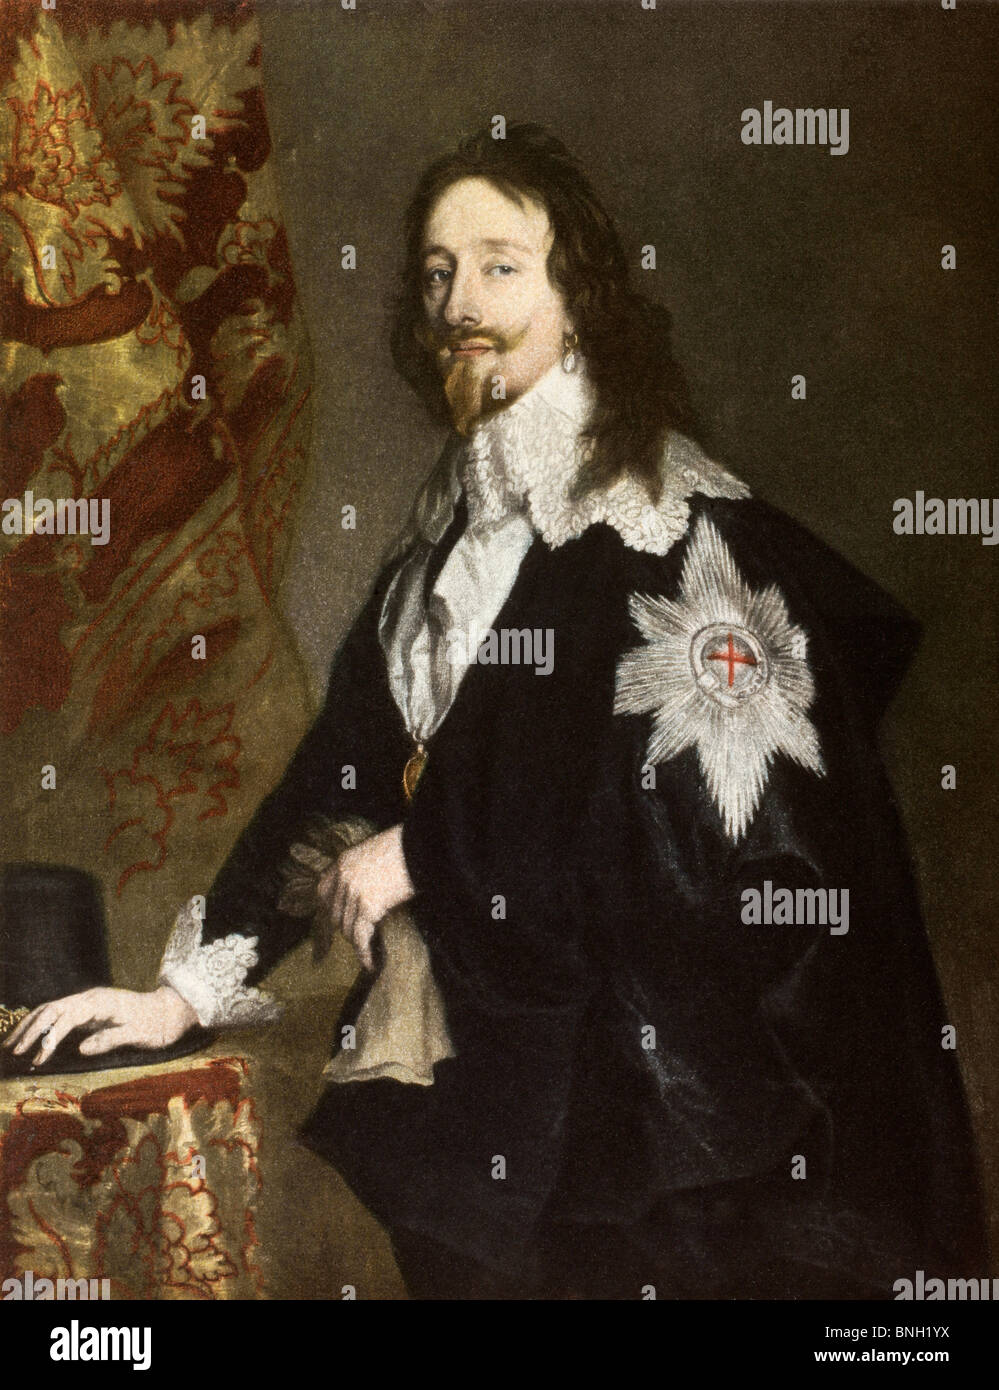 King Charles I of England 1600 - 1649. Stock Photo